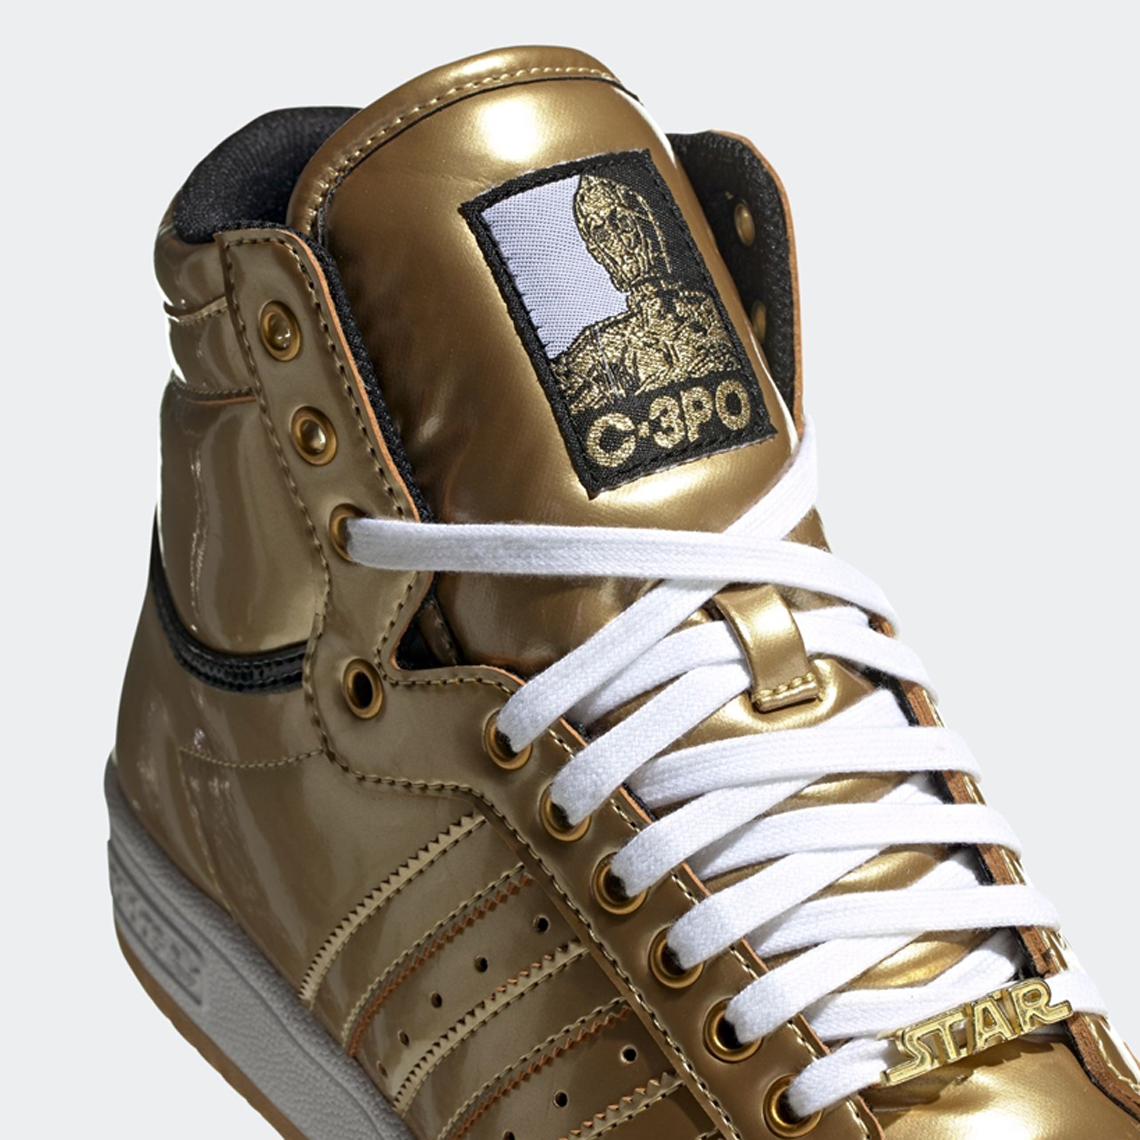 Stars Wars adidas Top Ten Hi C-3PO FY2458 2020 | SneakerNews.com